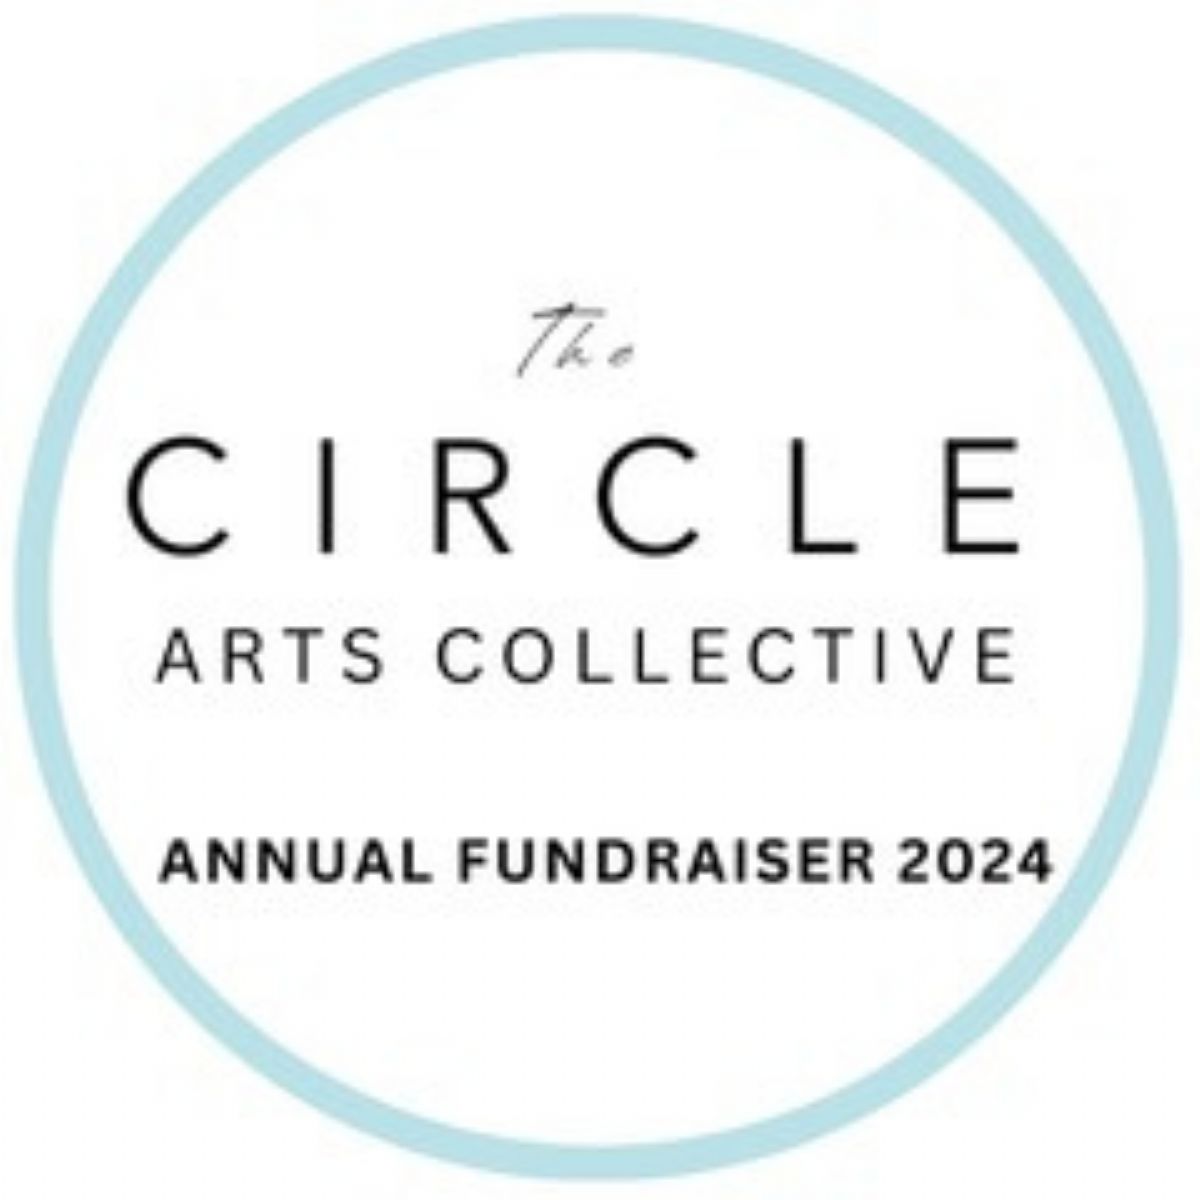 The Circle Arts Fundraiser